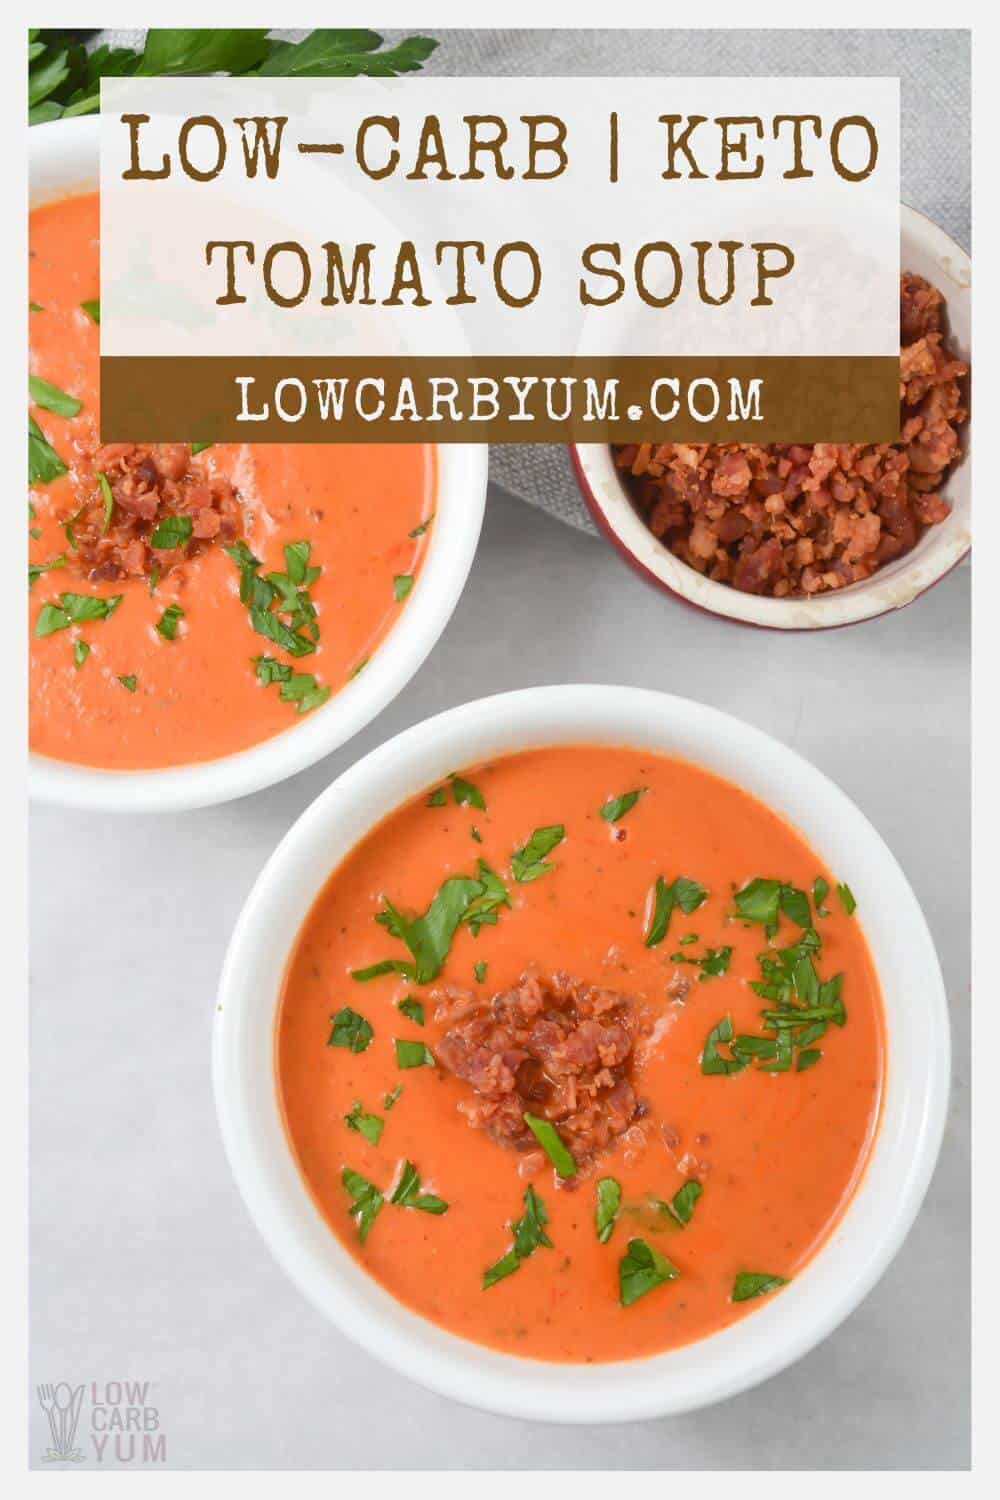 keto tomato soup pinterest image.